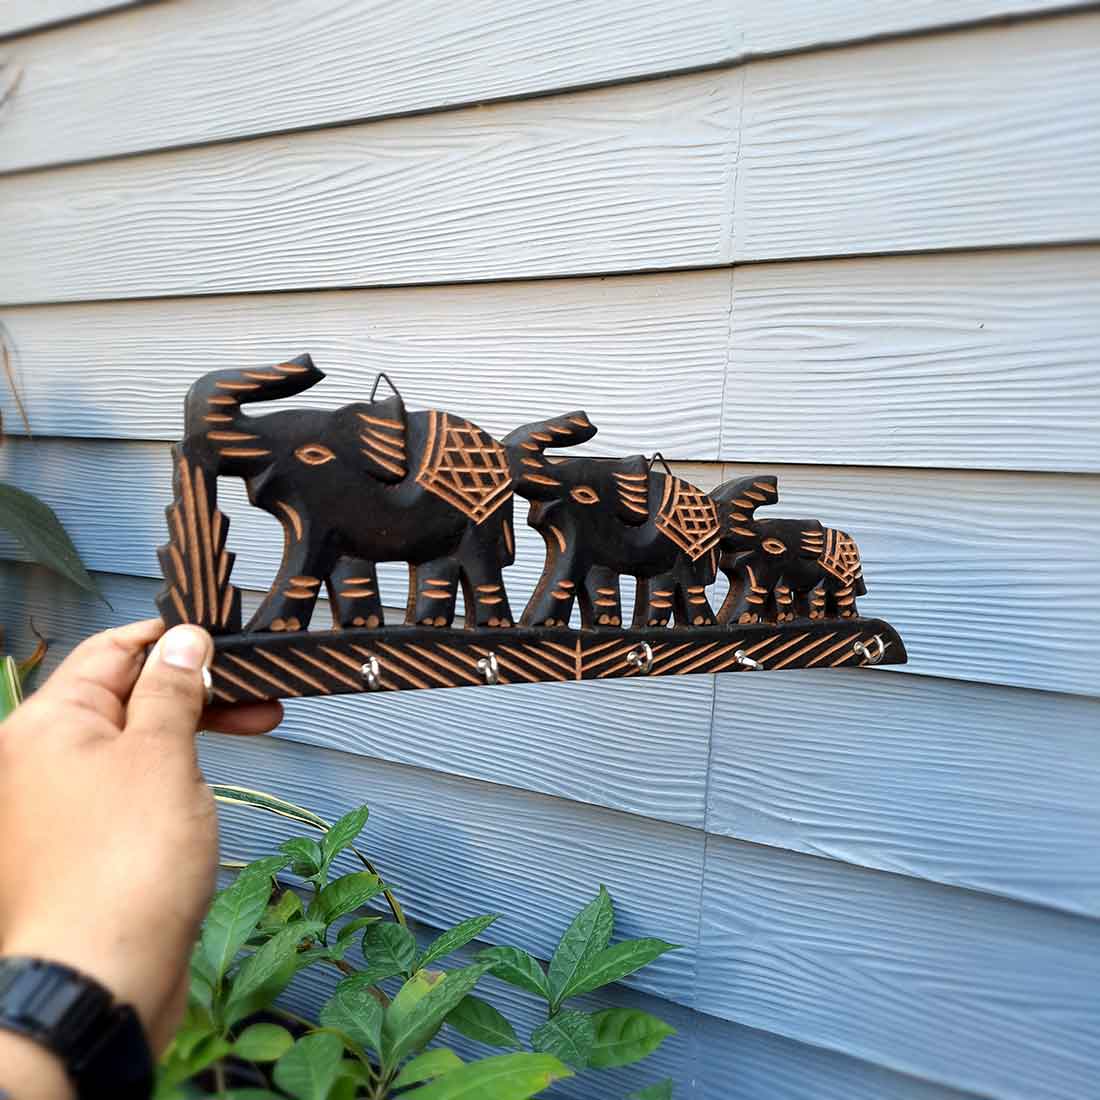 Key Holder Wall Hanging | Key Hook Stand - Elephant Design | Wooden Keys Organizer - For Home, Entrance, Office Decor & Gifts -14 Inch  (6 Hooks)